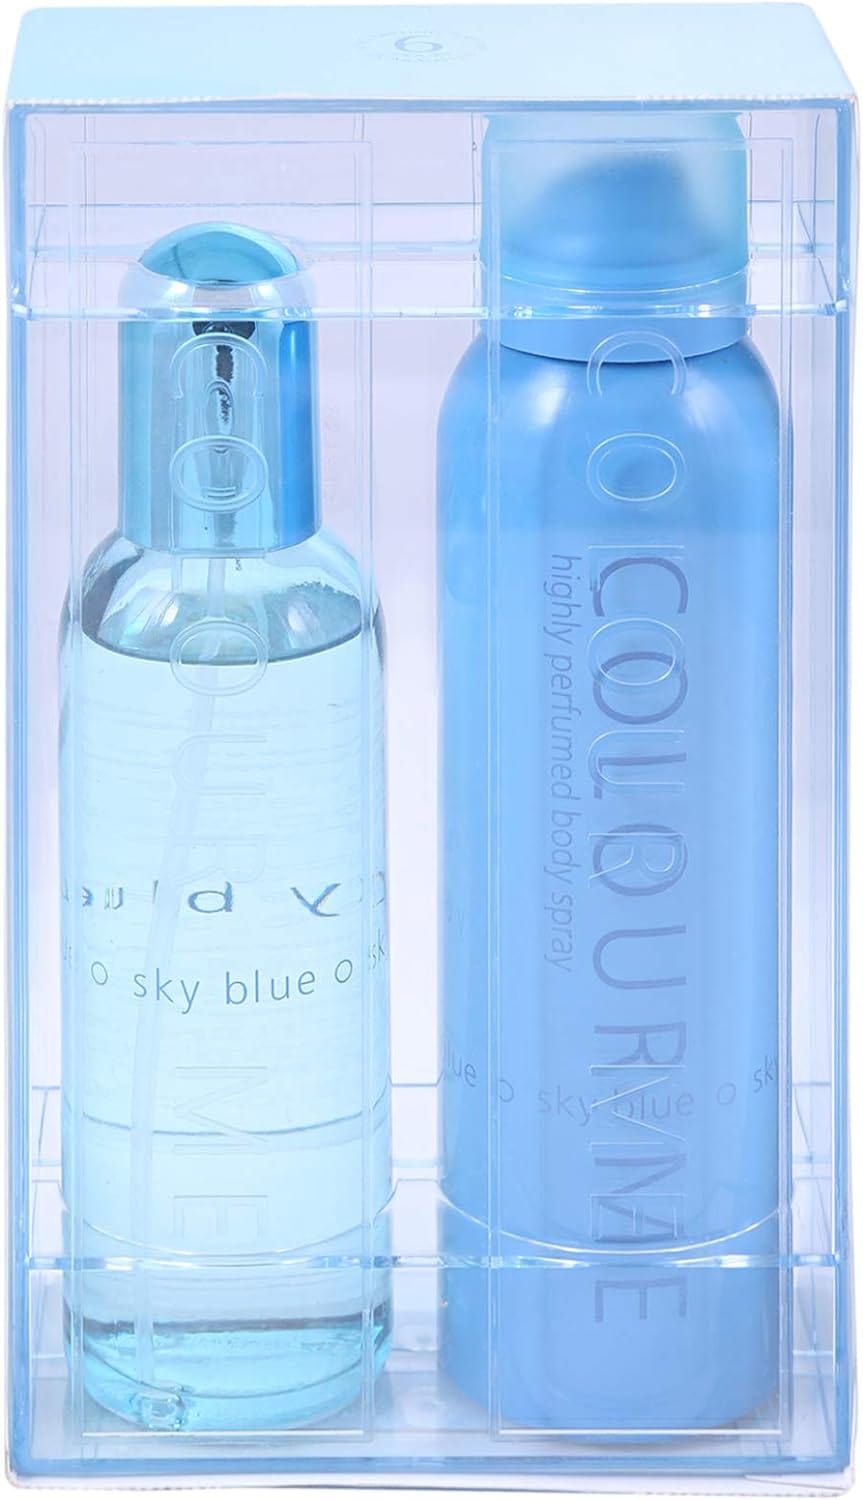 Colour Me Sky Blue Casket fragrance 100ml/Body Spray